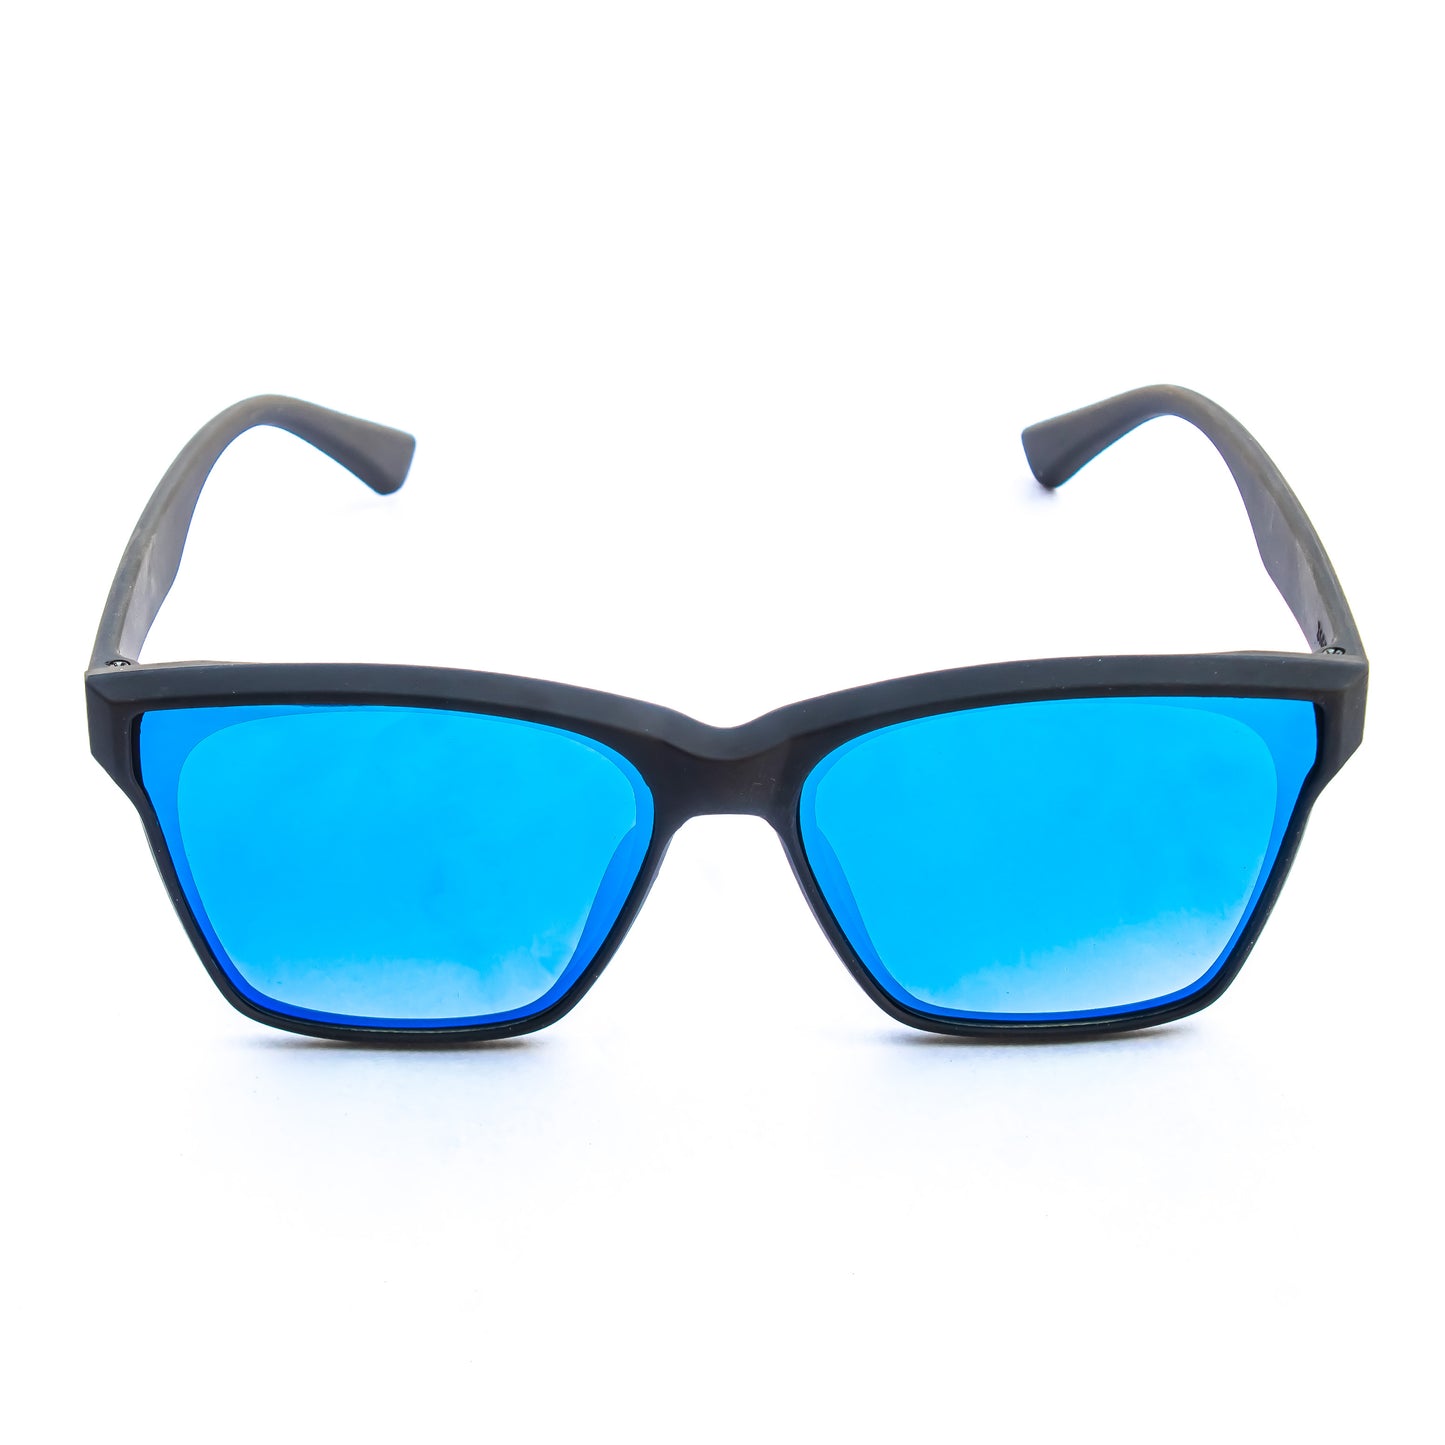  Blue ice sunglasses